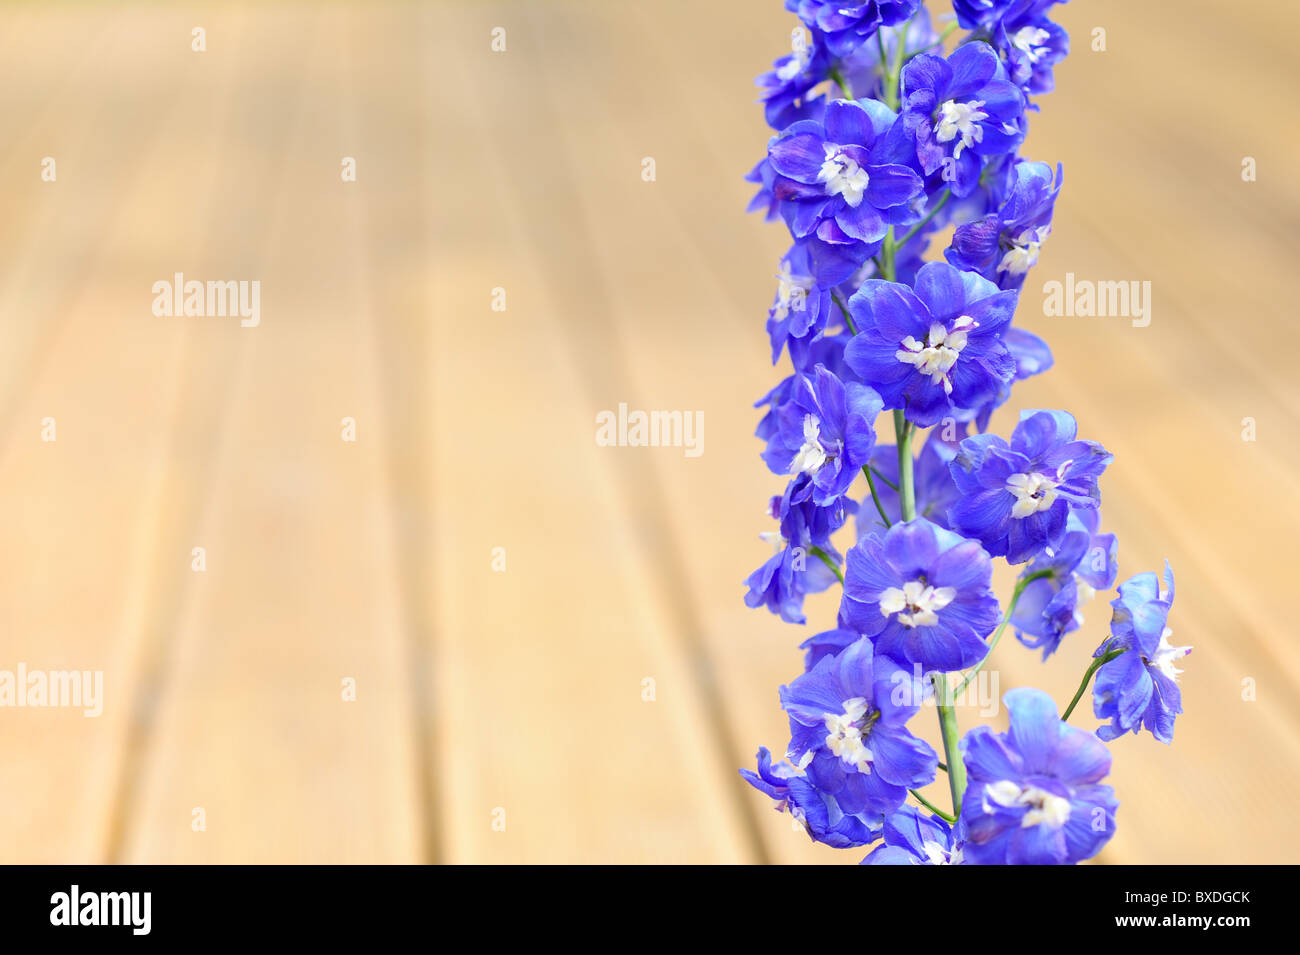 flower 'Rittersporn' Stock Photo